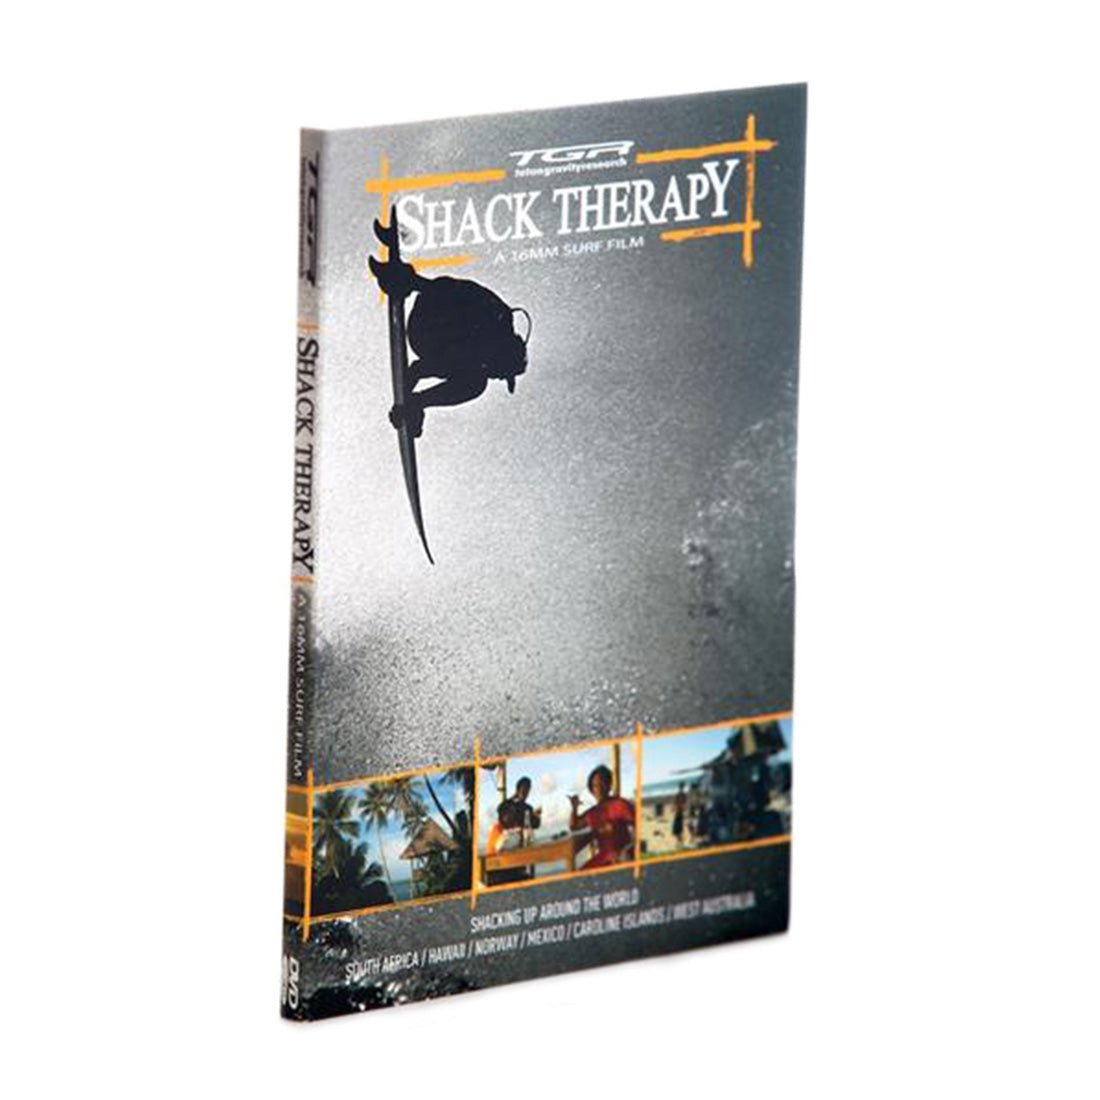 Shack Therapy DVD - Teton Gravity Research